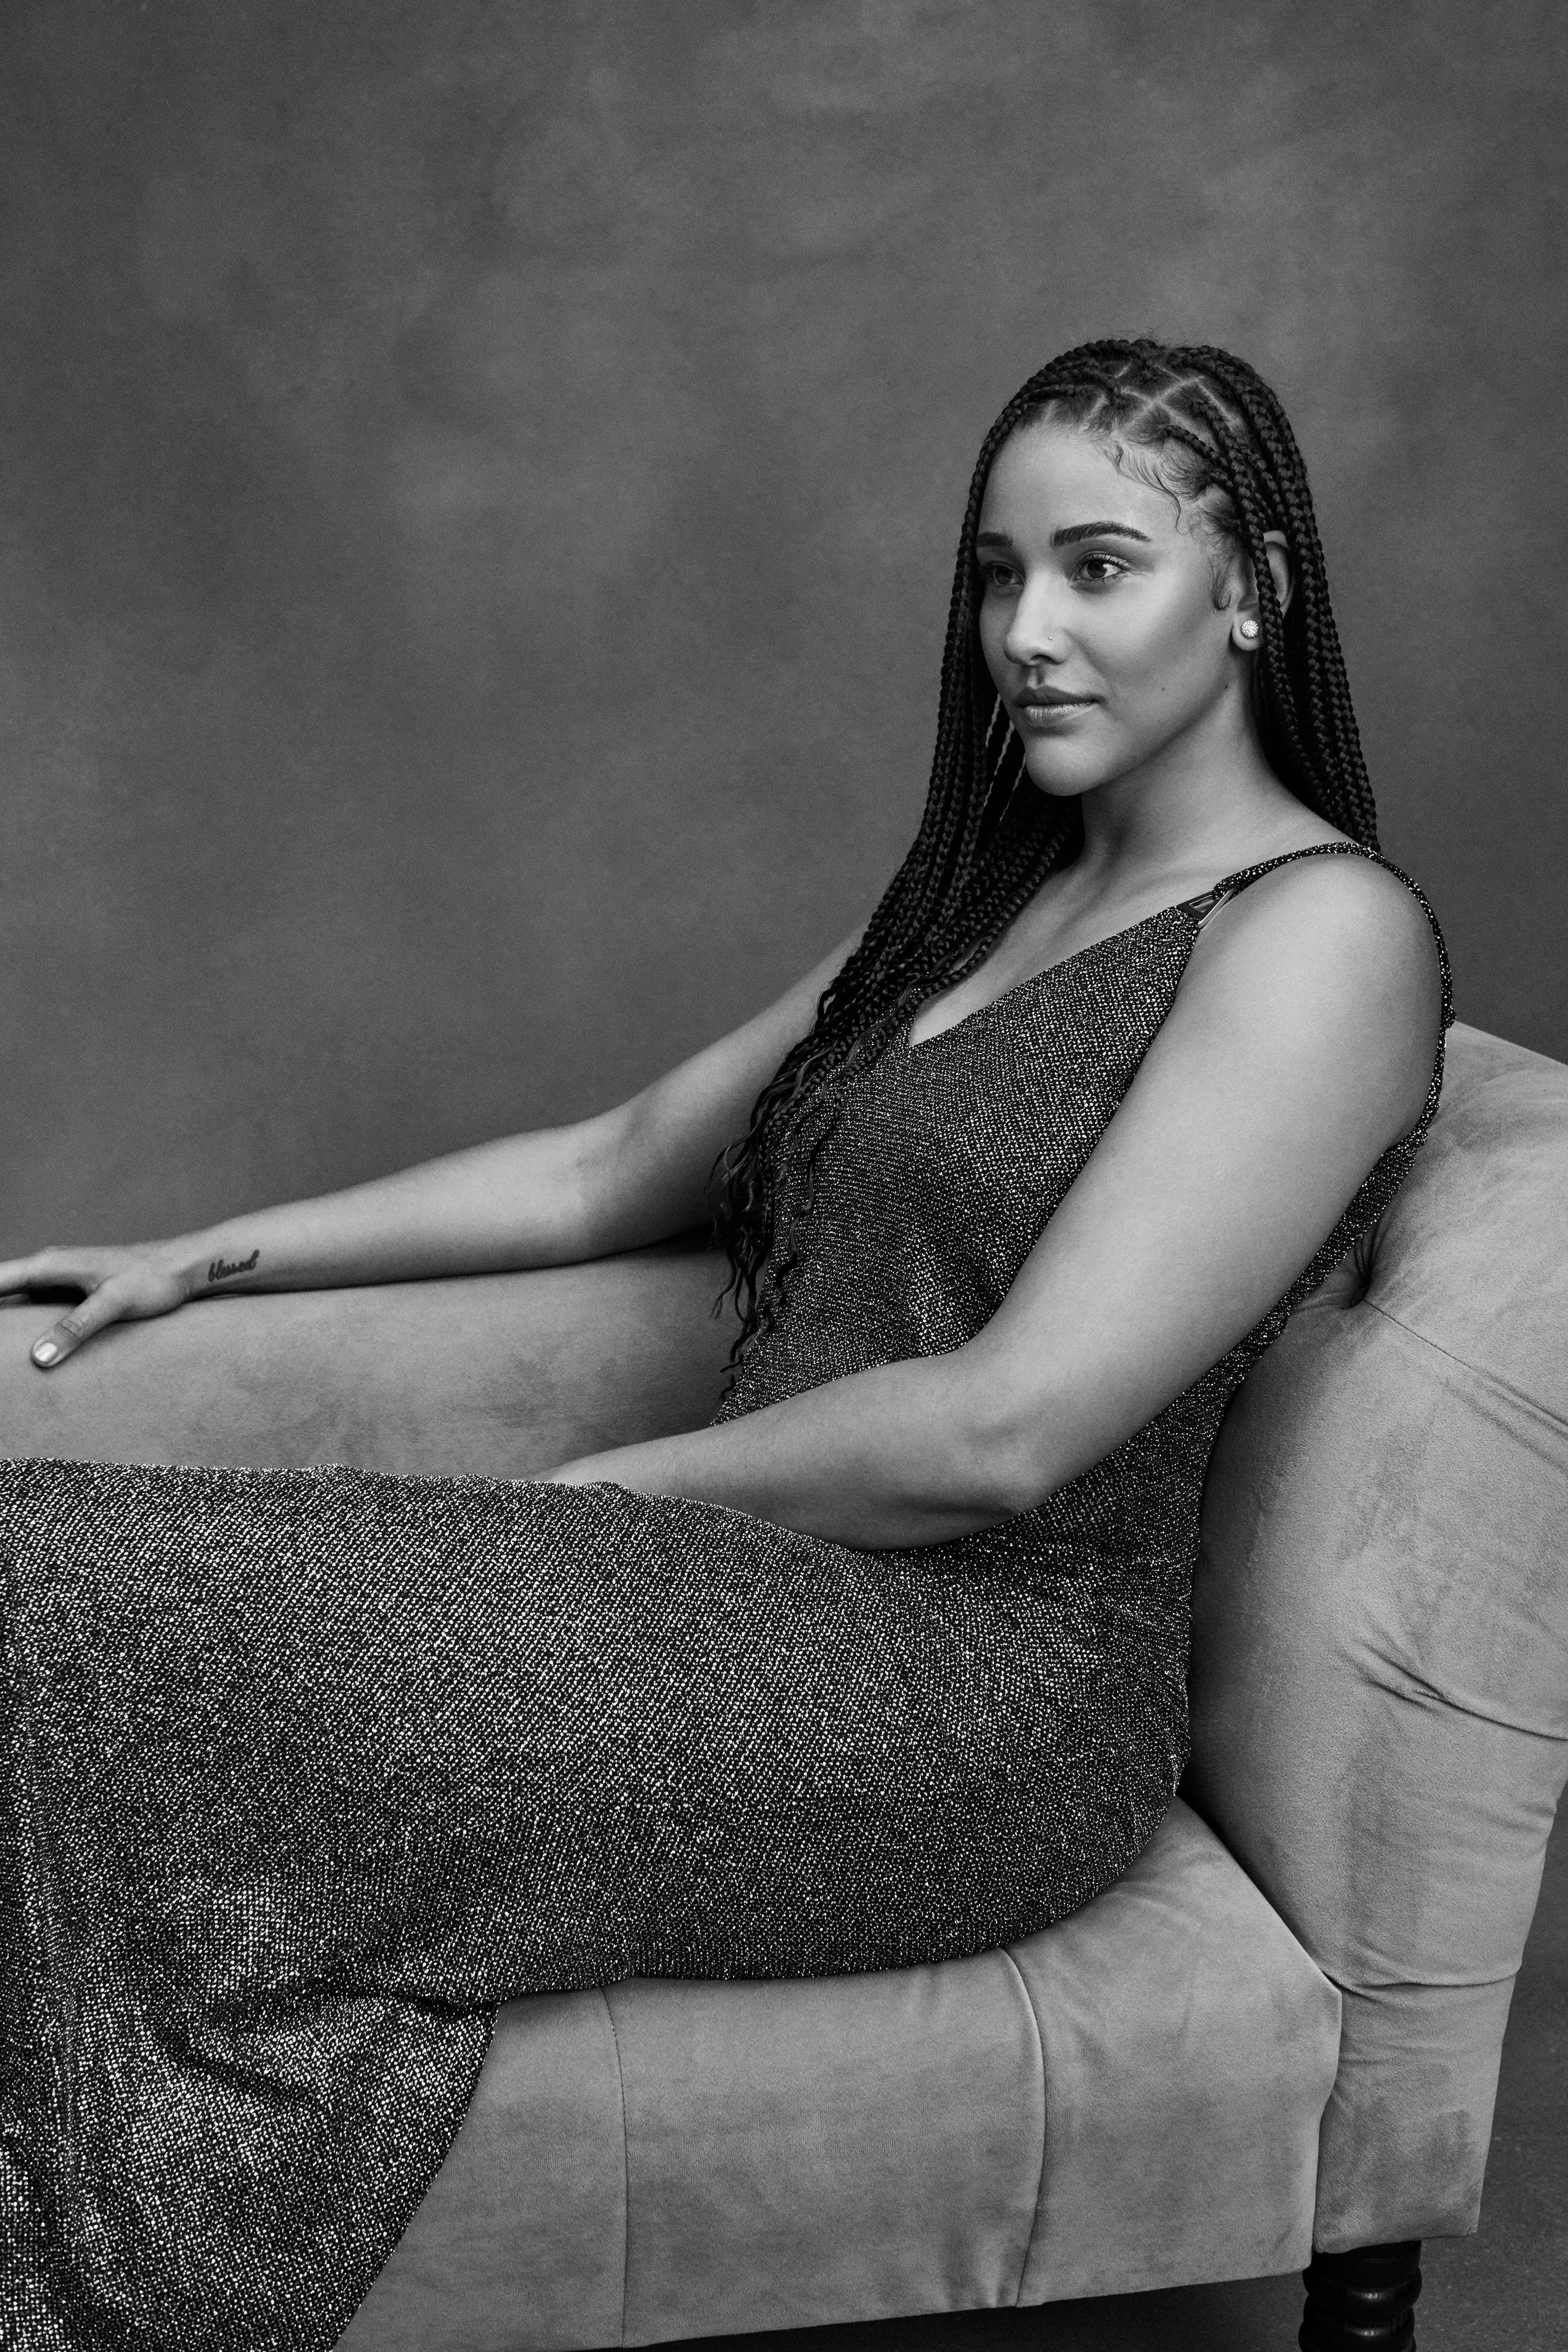 WNBA Slay! Brooklyn Photography Students Take Stunning Photos of Black Female Athletes